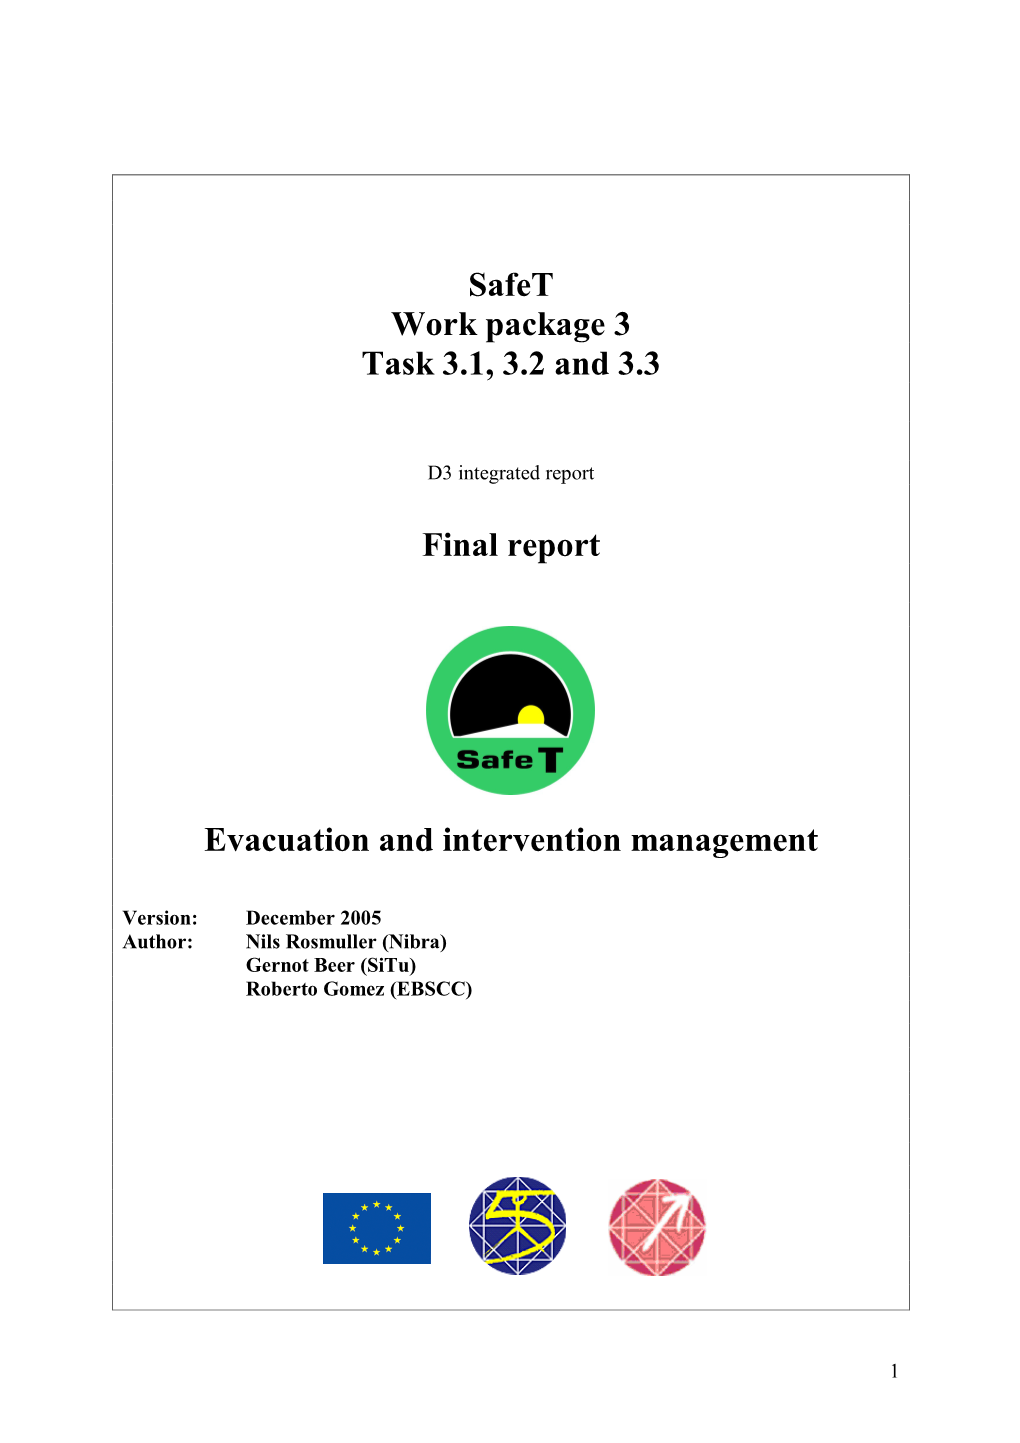 Evacuation and Intervention Management